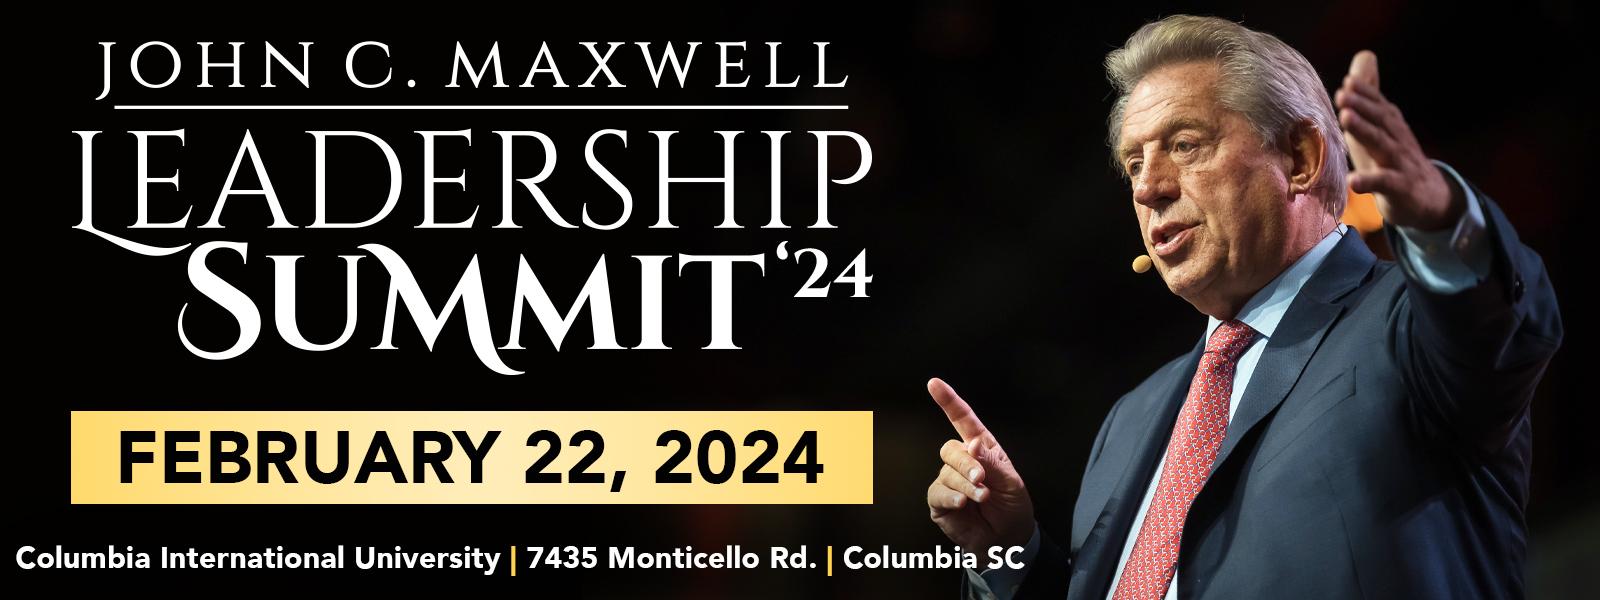 John C. Maxwell Leadership Summit, February 22, 2024. Columbia International University 7435 Monticello Rd. Columbia SC